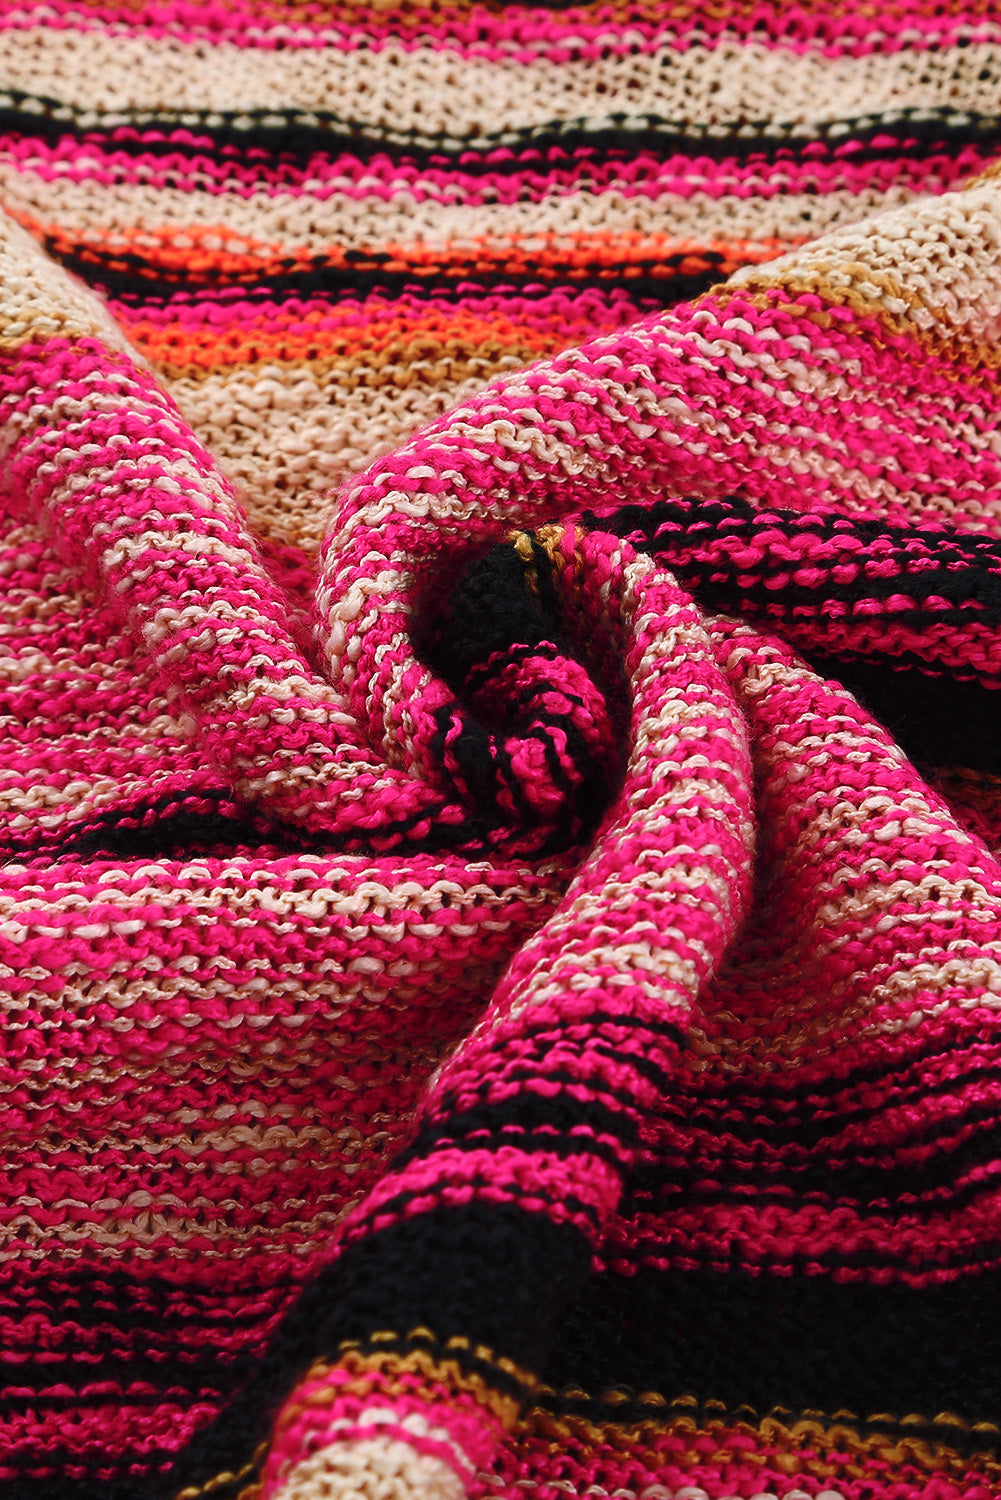 Striped Colorblock Drop Shoulder Knit Sweater